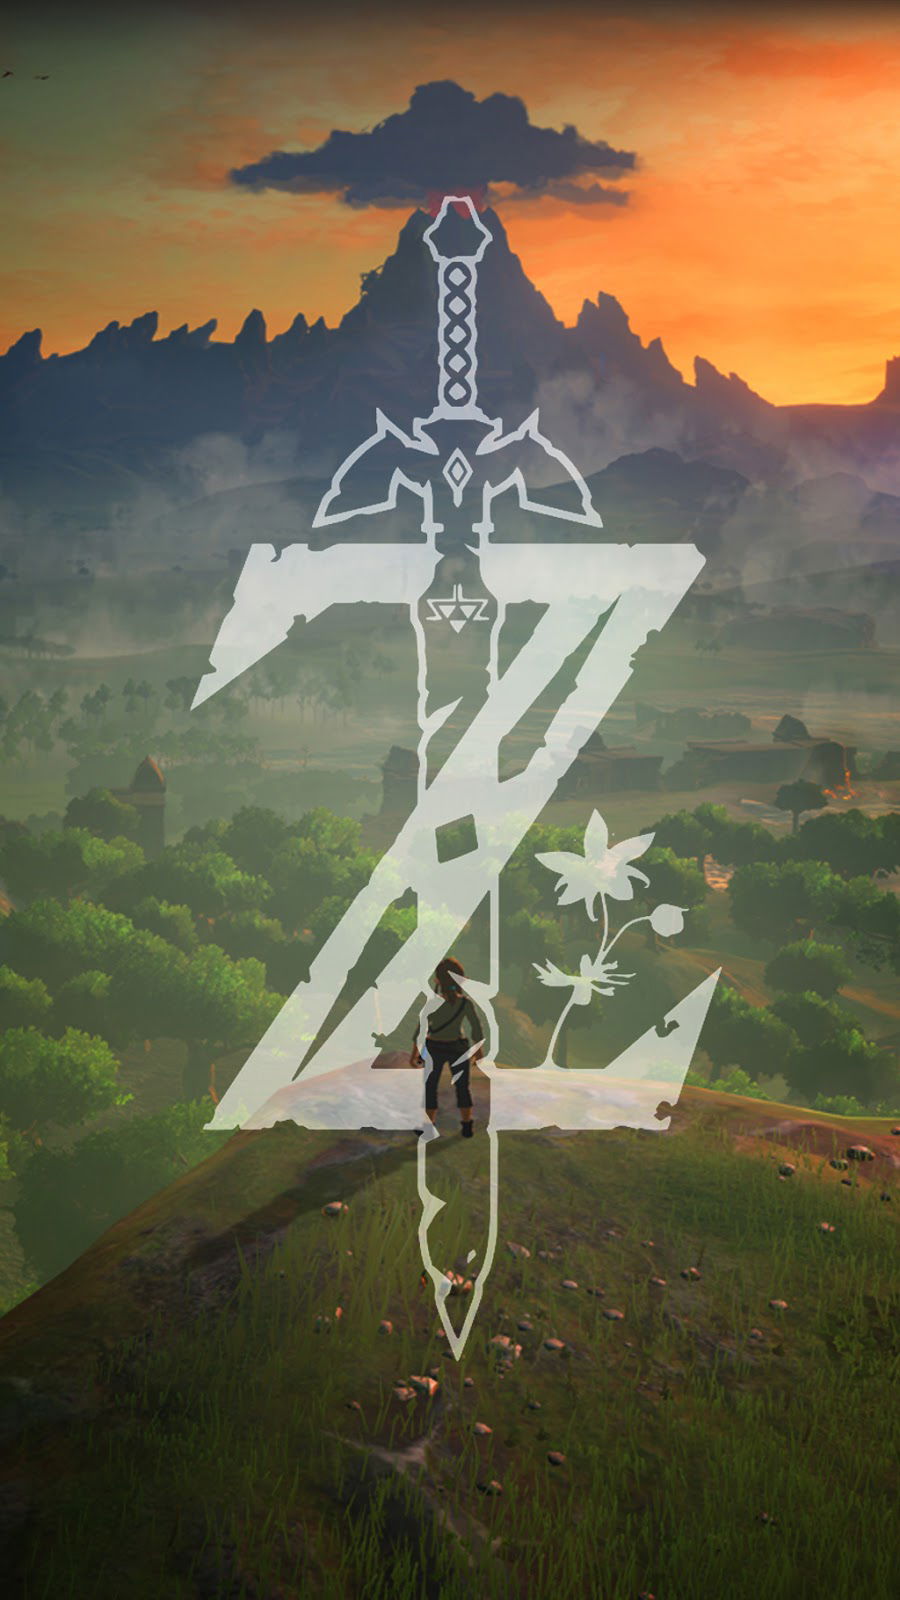 Zelda: Breath of the Wild Scenic Desktop Wallpaper Collection | Switch RPG